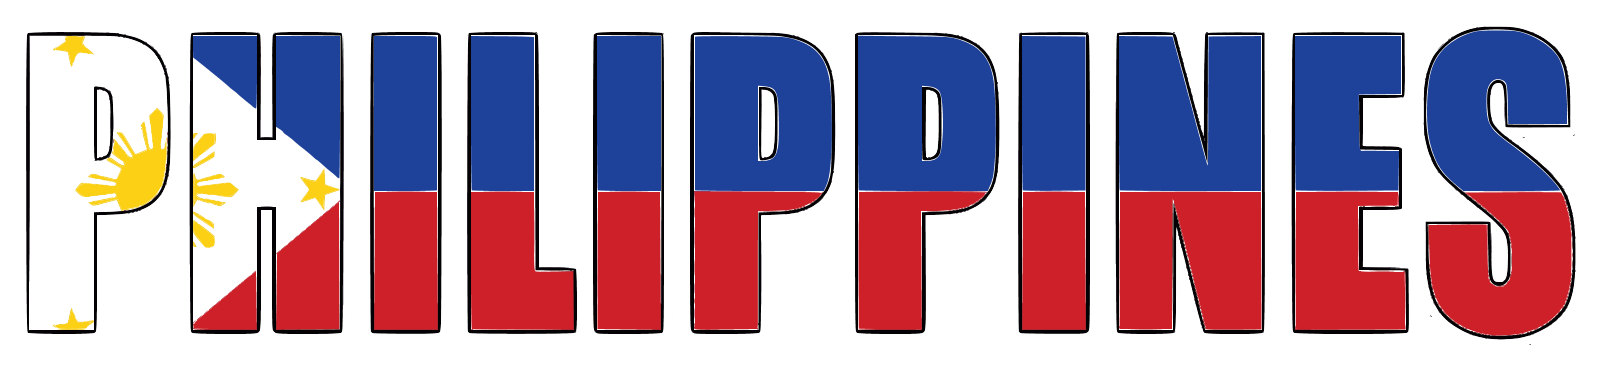 Philippines word flag